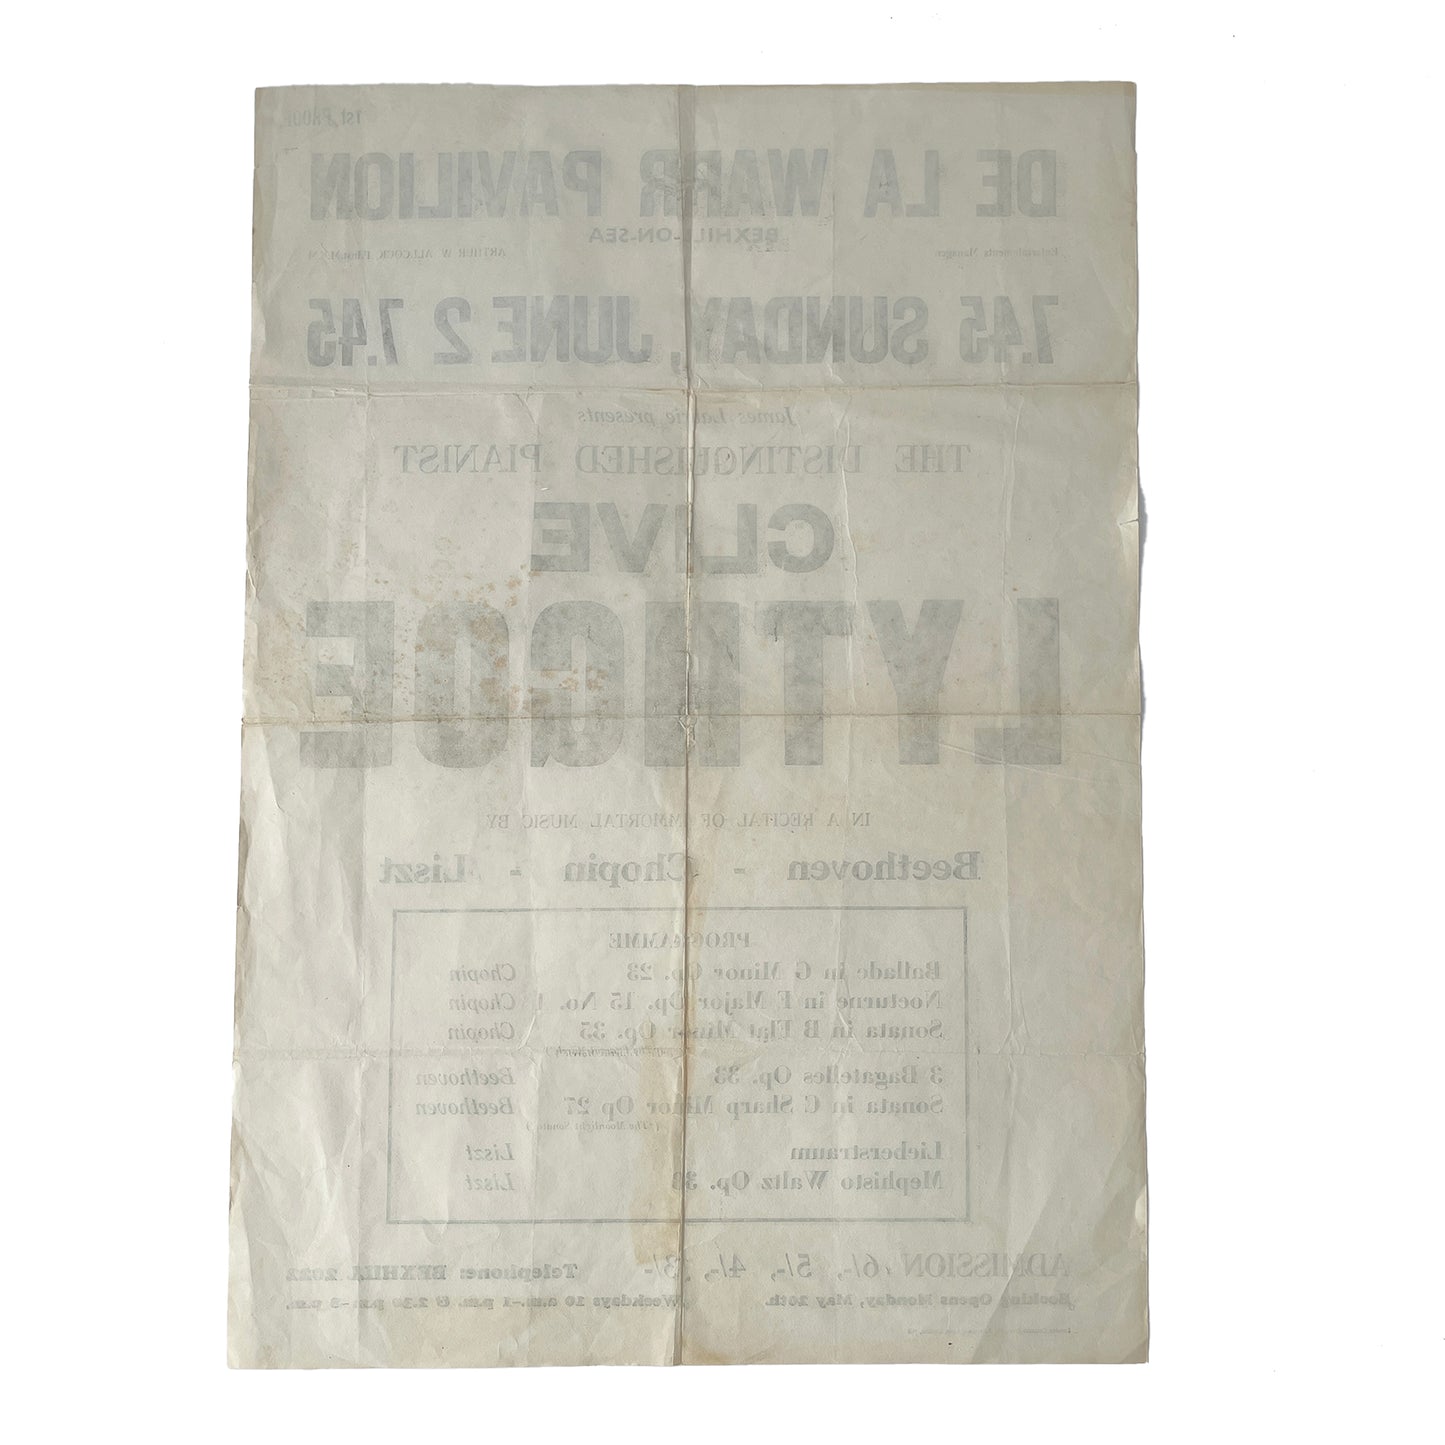 Original Letterpress Printed Poster – Clive Lythgoe Circa 1960s